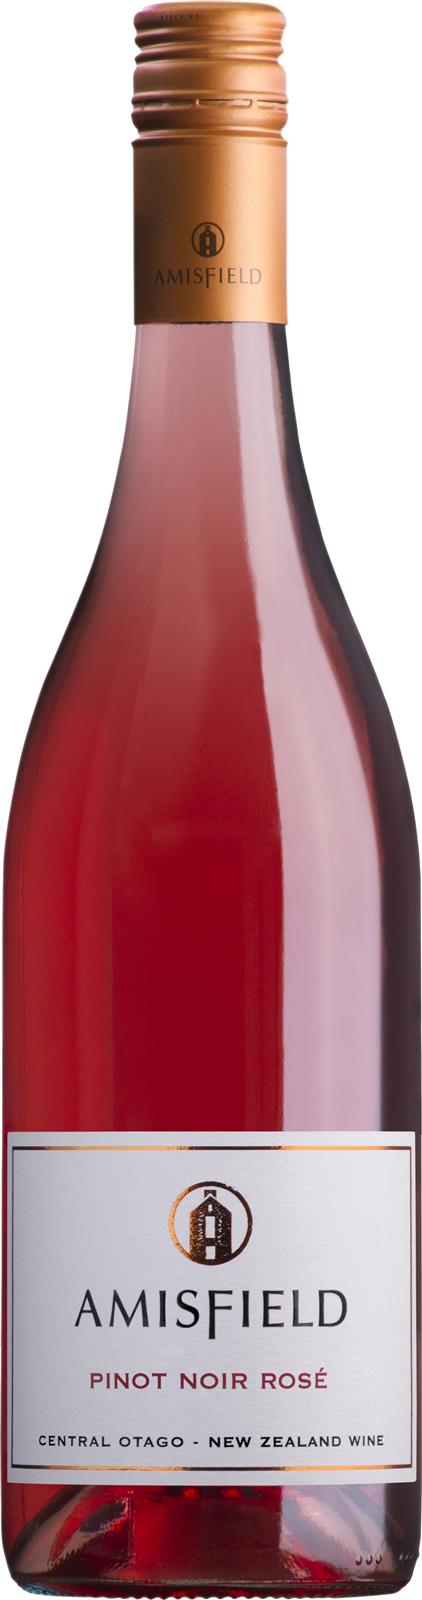 Amisfield Central Otago Pinot Noir Rosé 2019